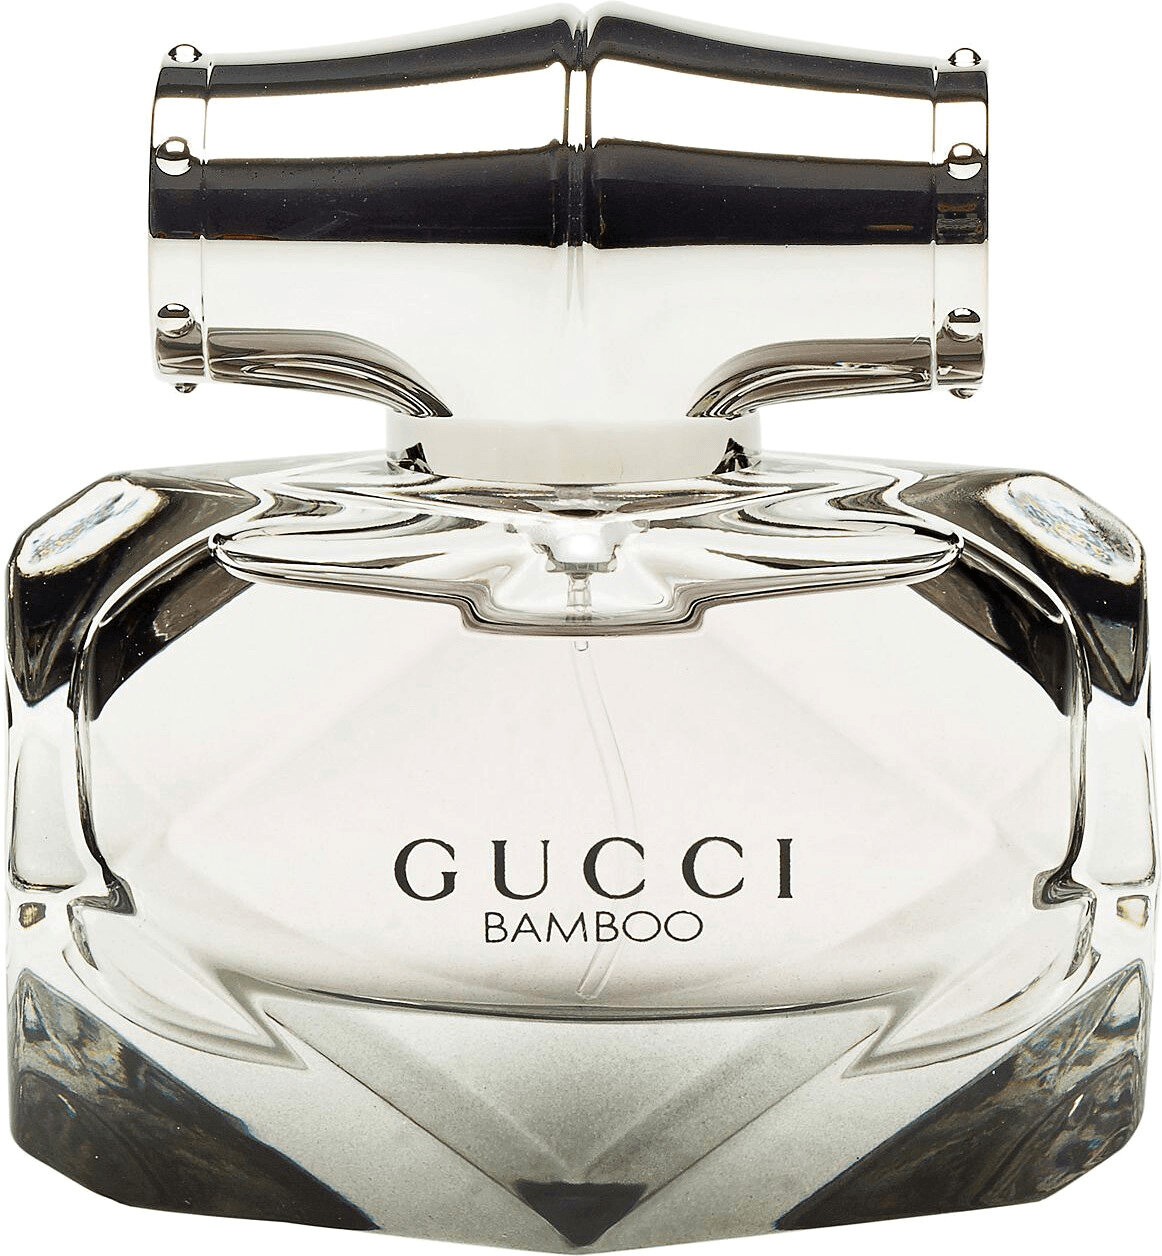 Buy Gucci Bamboo Eau de Parfum from £35.49 (Today) – Best Deals on ...